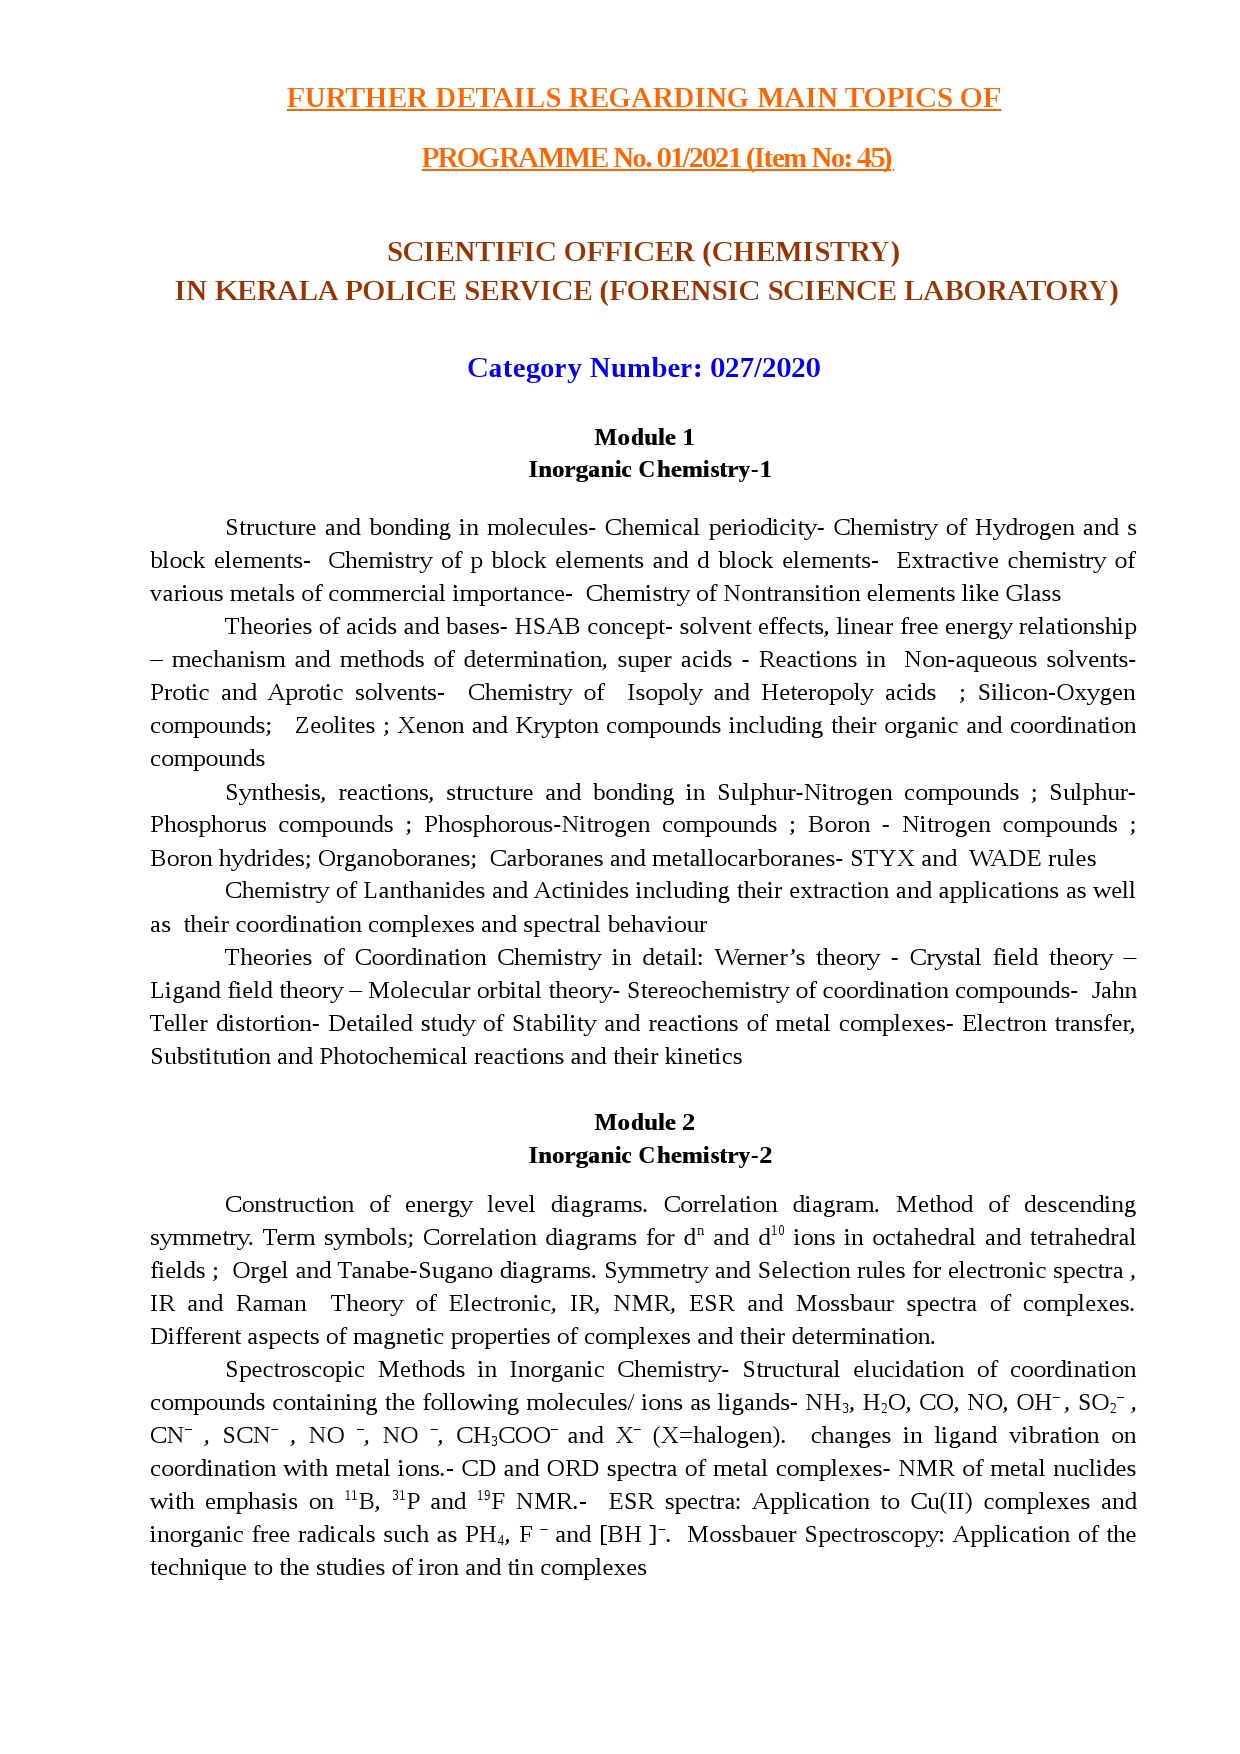 KPSC Syllabus 2021 Scientific Officer Chemistry - Notification Image 1